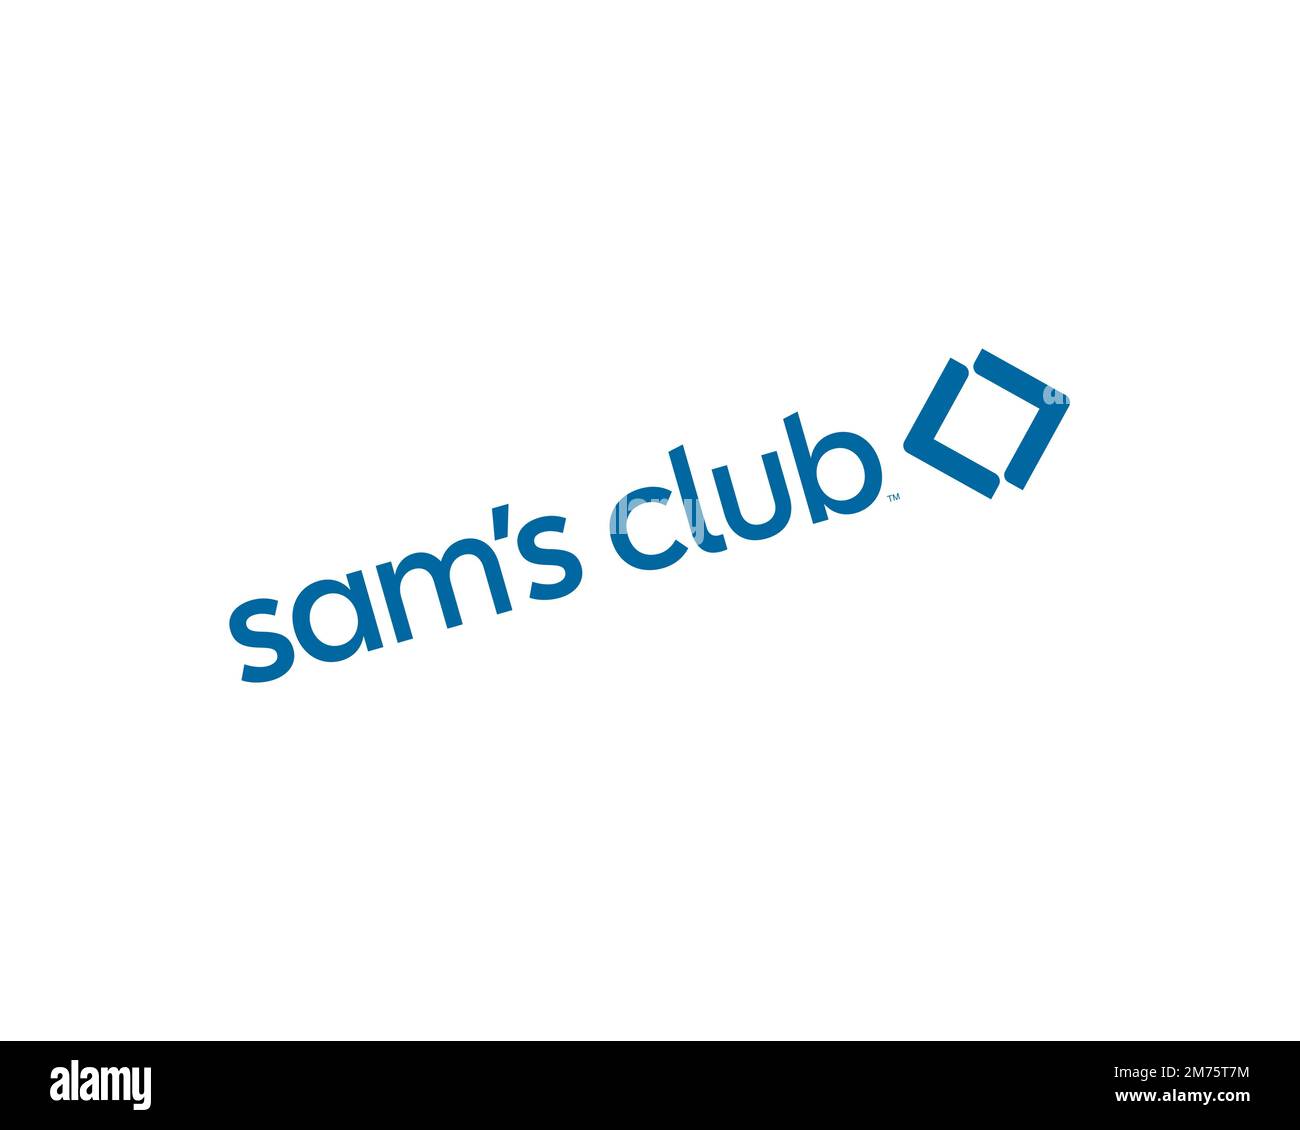 Sam's Club, Rotated Logo, White Background Stock Photo